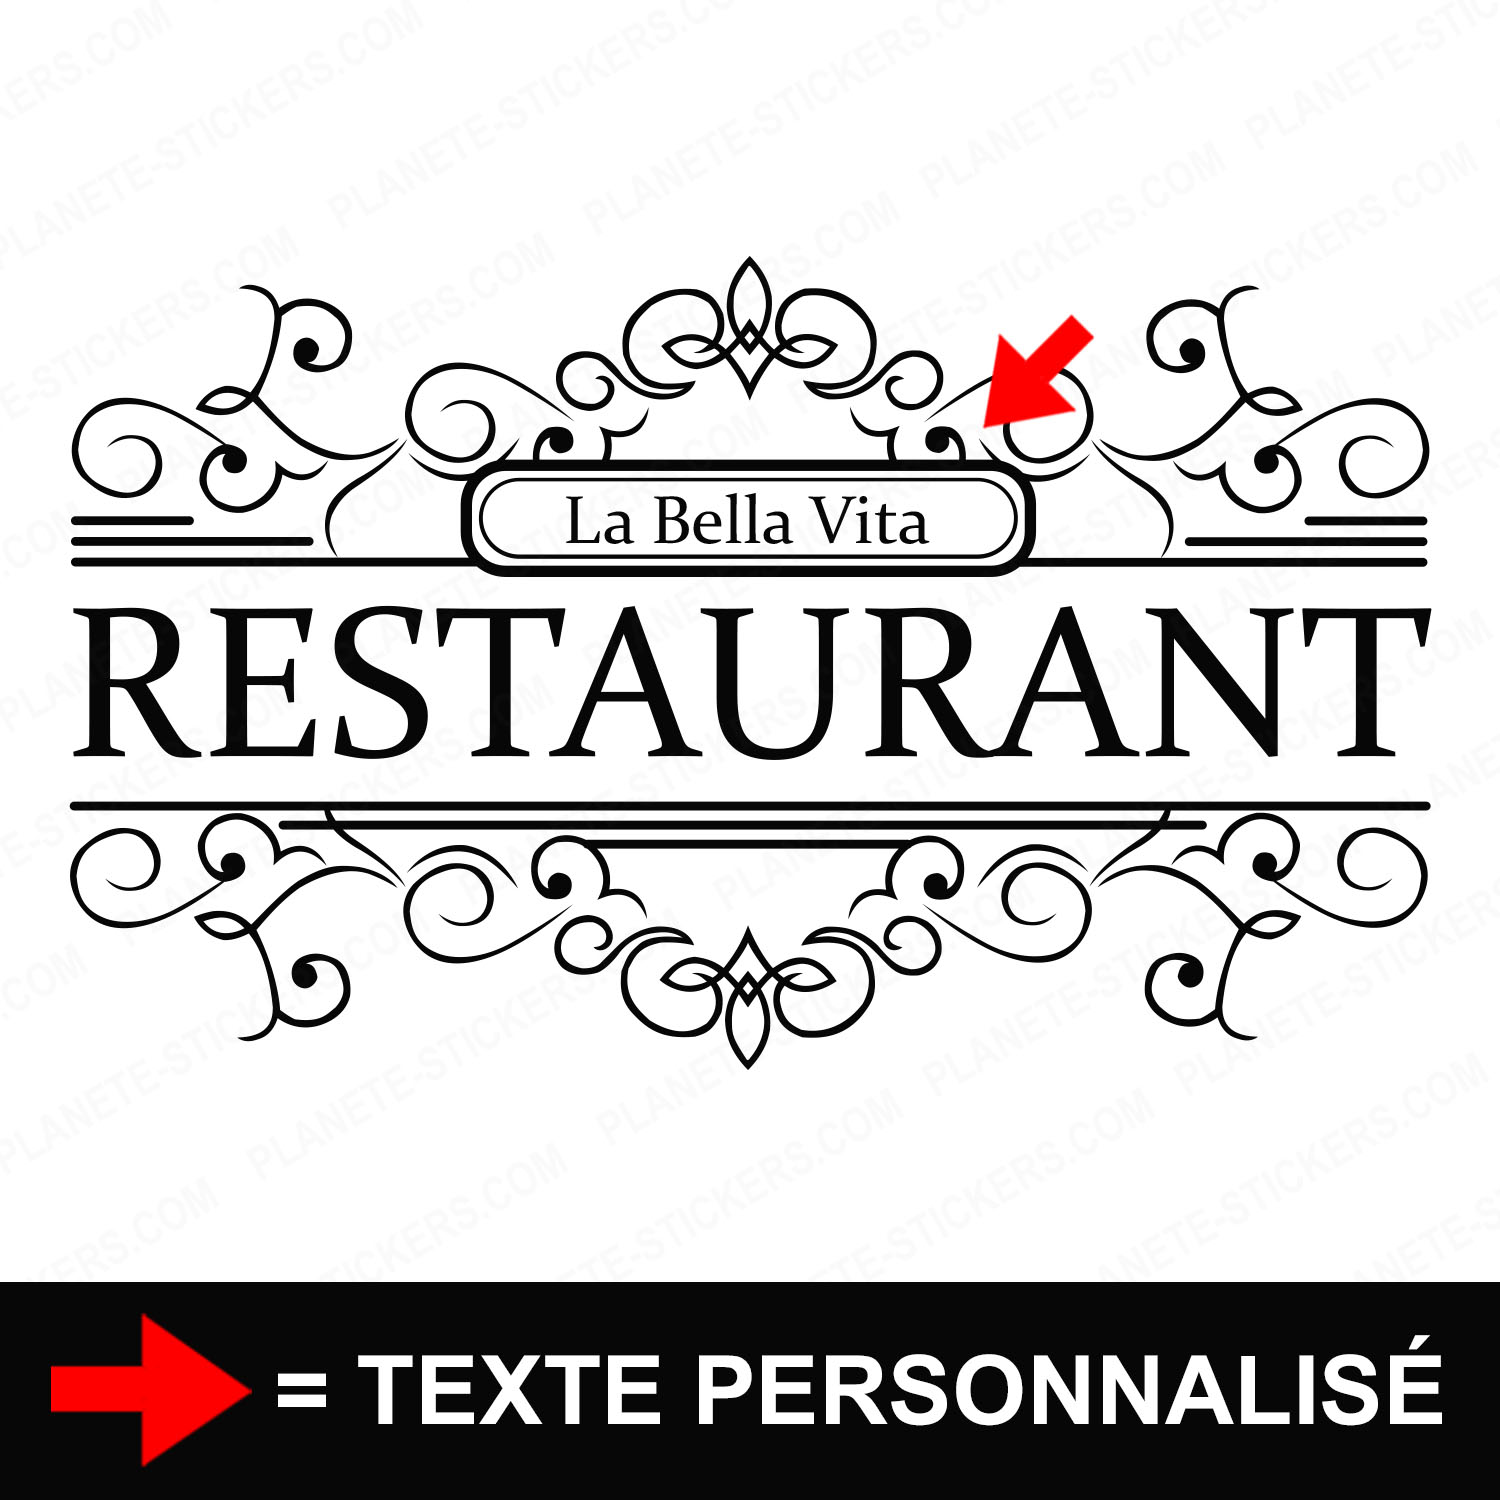 ref9restaurantvitrine-stickers-restaurant-vitrine-restaurant-sticker-personnalisé-autocollant-pro-restaurateur-vitre-resto-professionnel-logo-arabesque-2